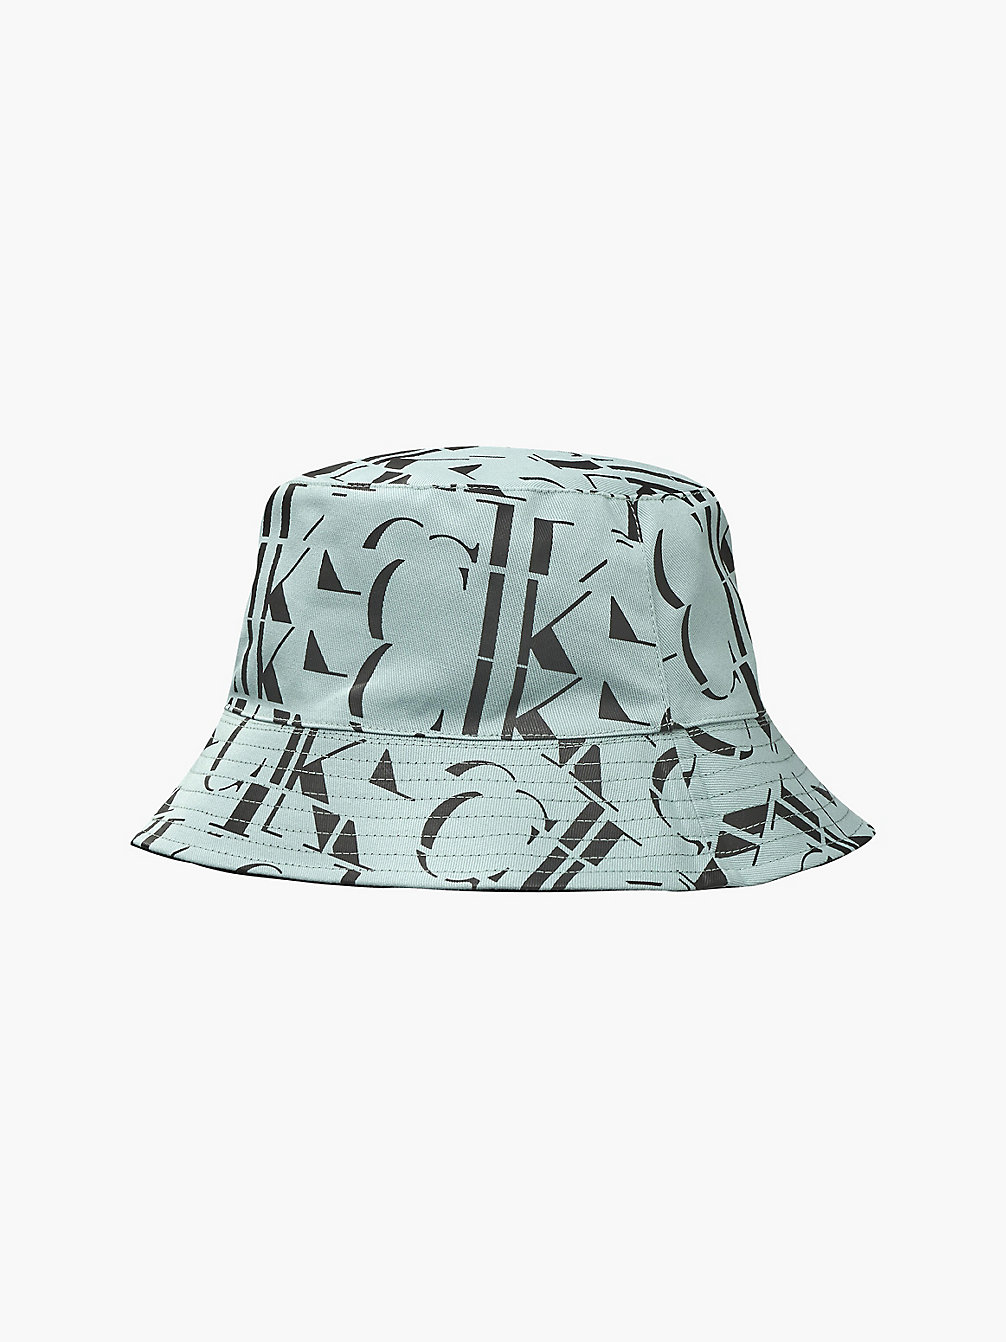 AQUA/BLACK Unisex Reversible Bucket Hat undefined kids unisex Calvin Klein